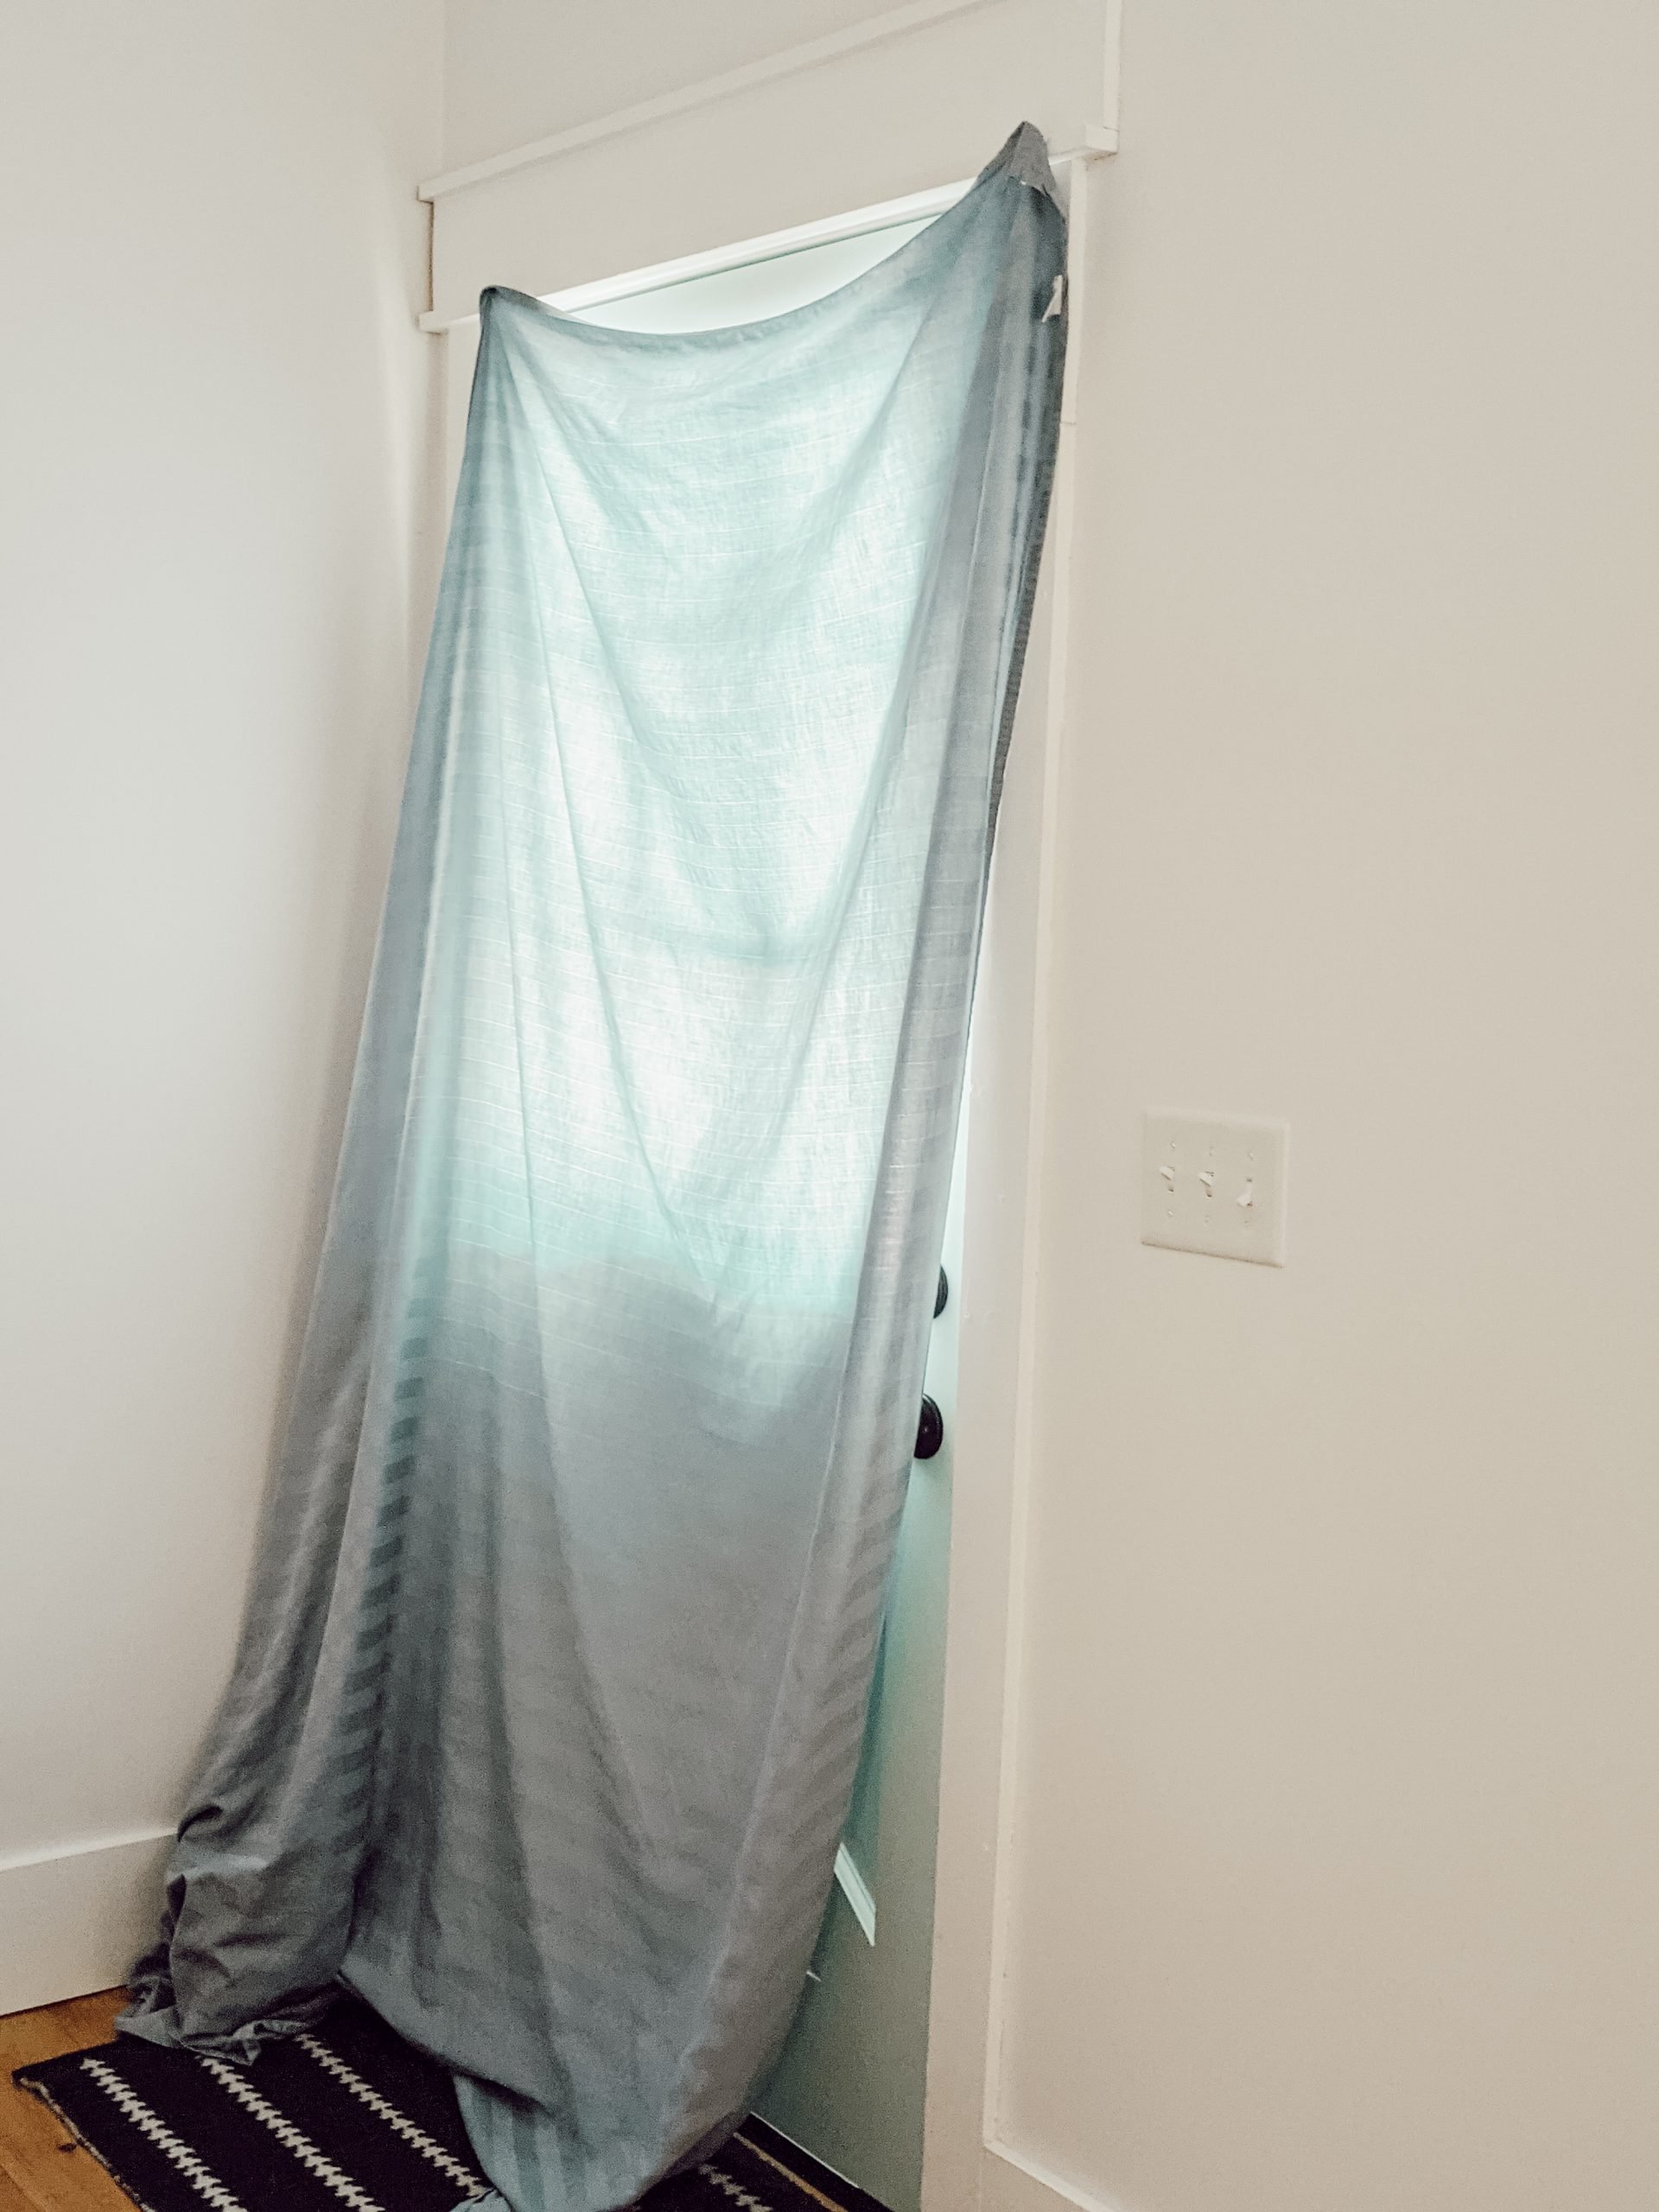 blue bedsheet as temporary curtain